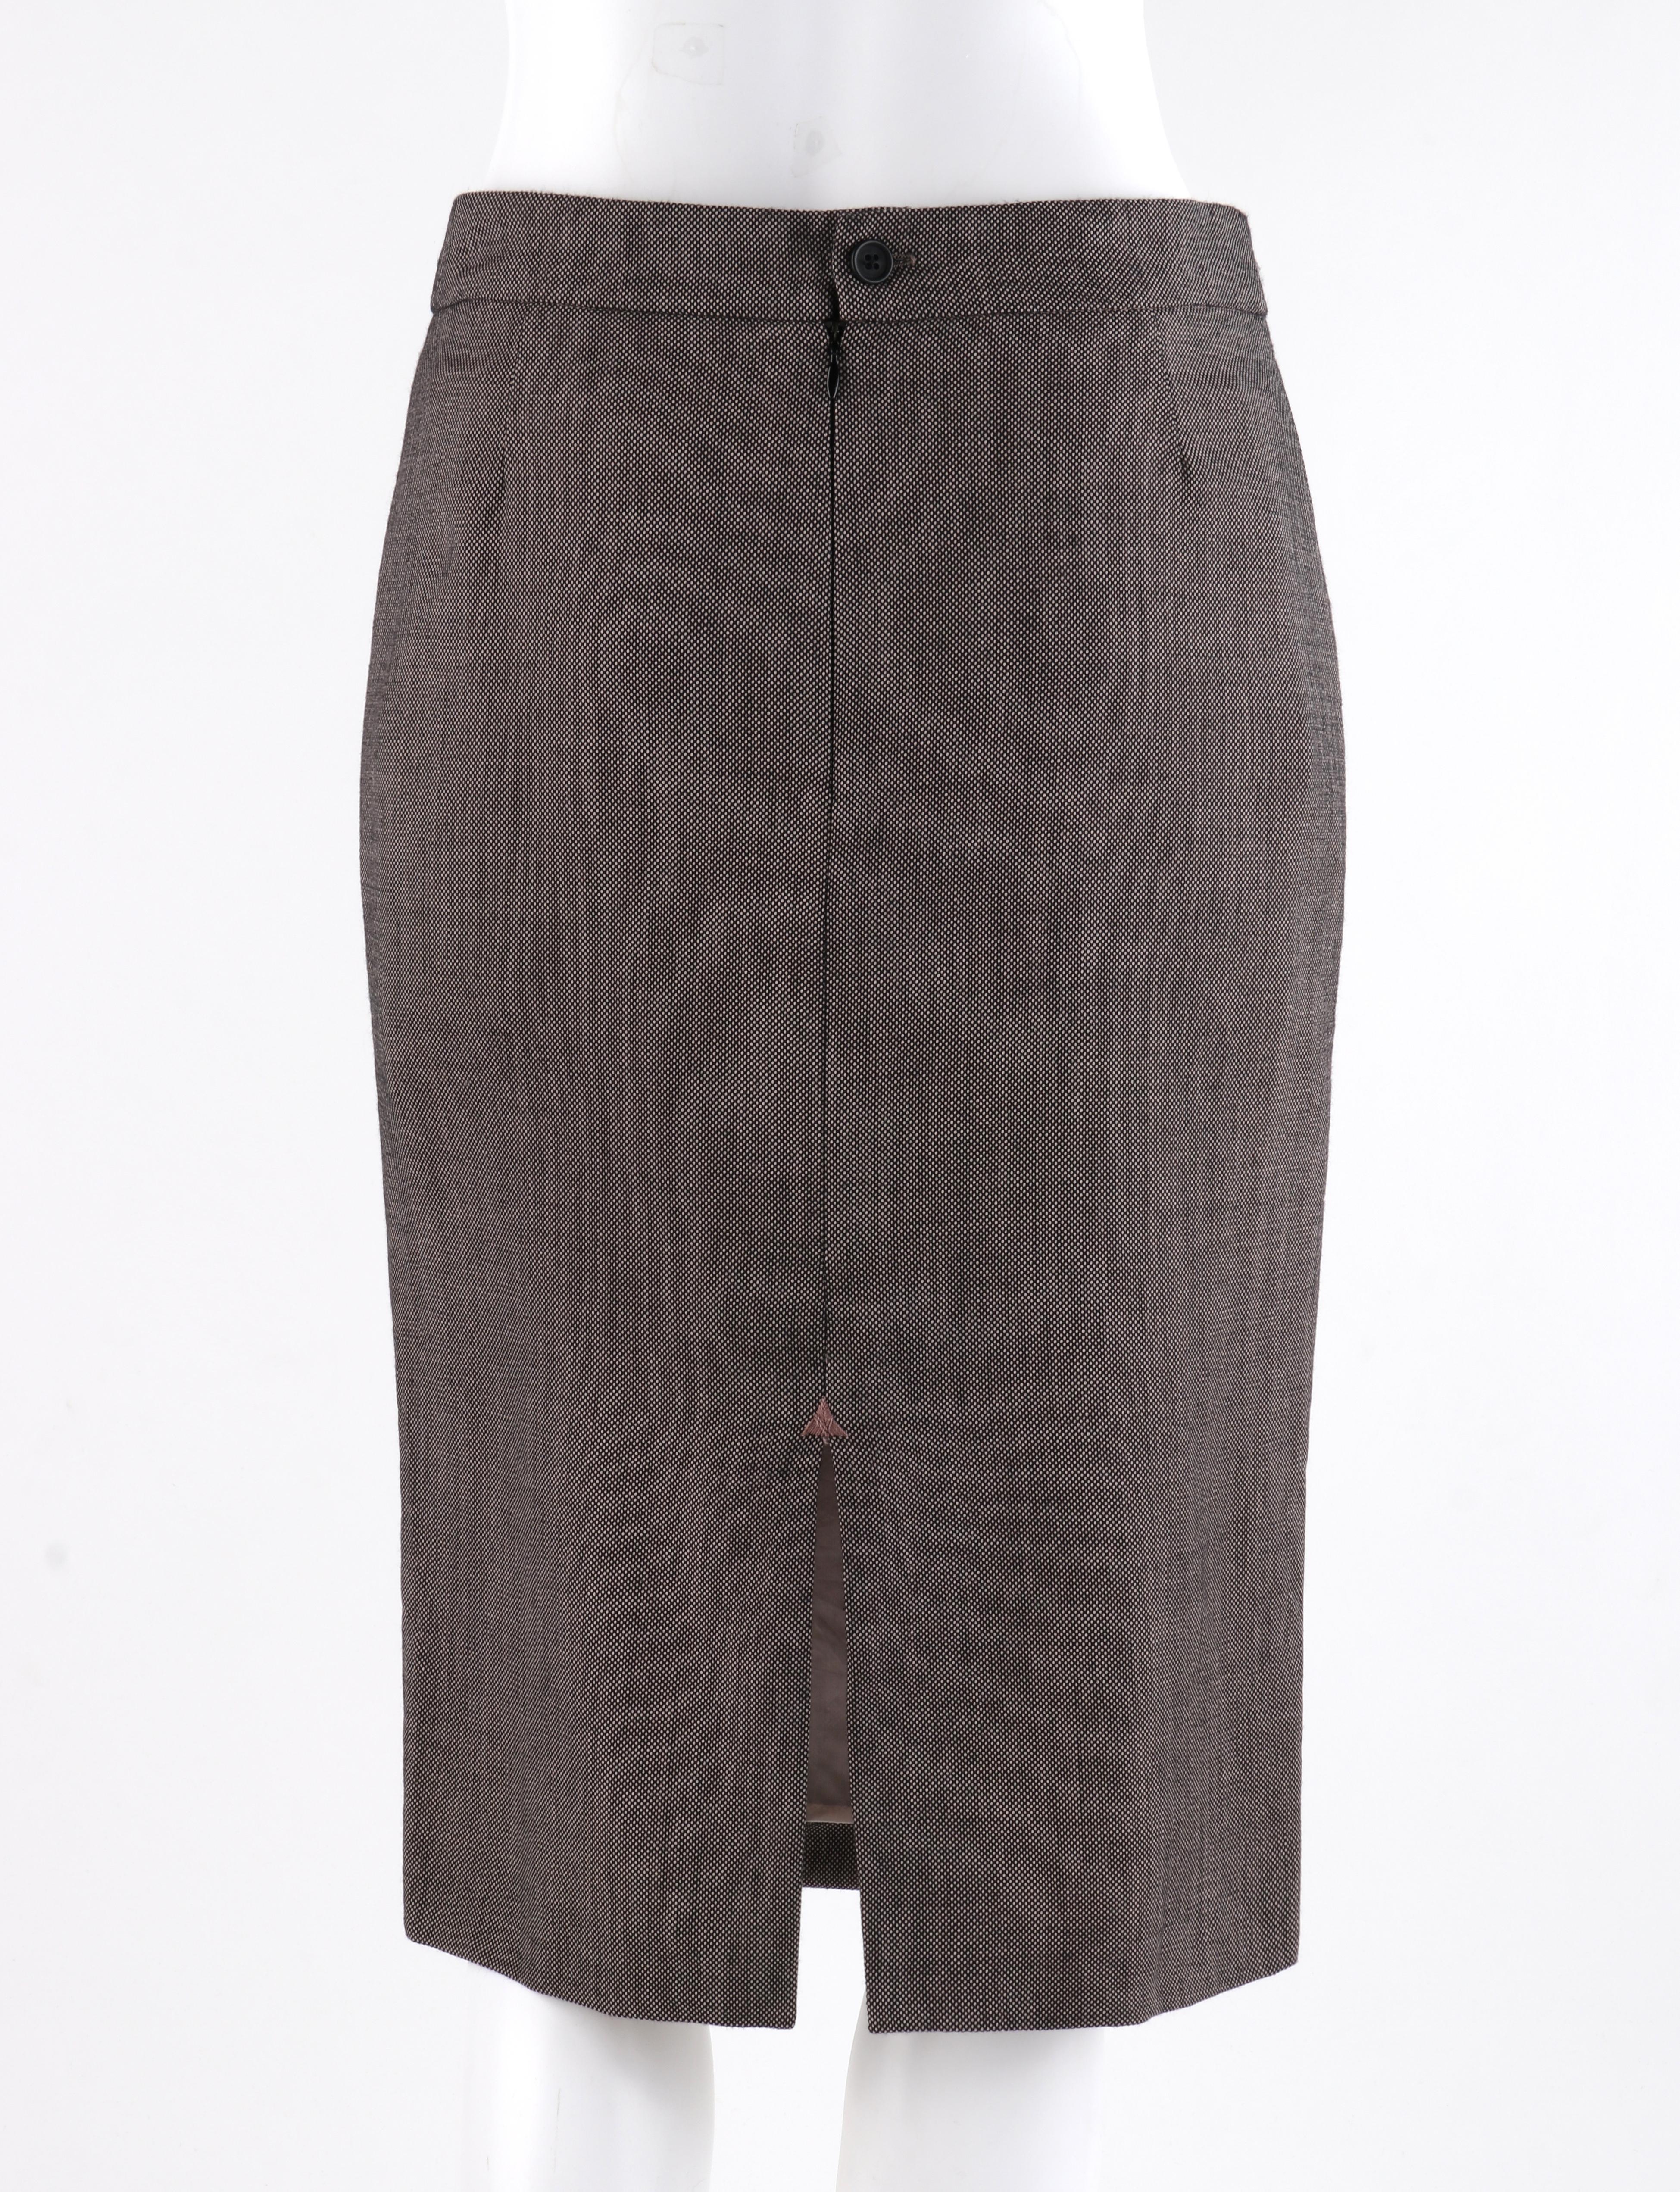  ALEXANDER McQUEEN A/W 1998 “Joan” 2 pc. Removable Collar Blazer Skirt Suit Set For Sale 3